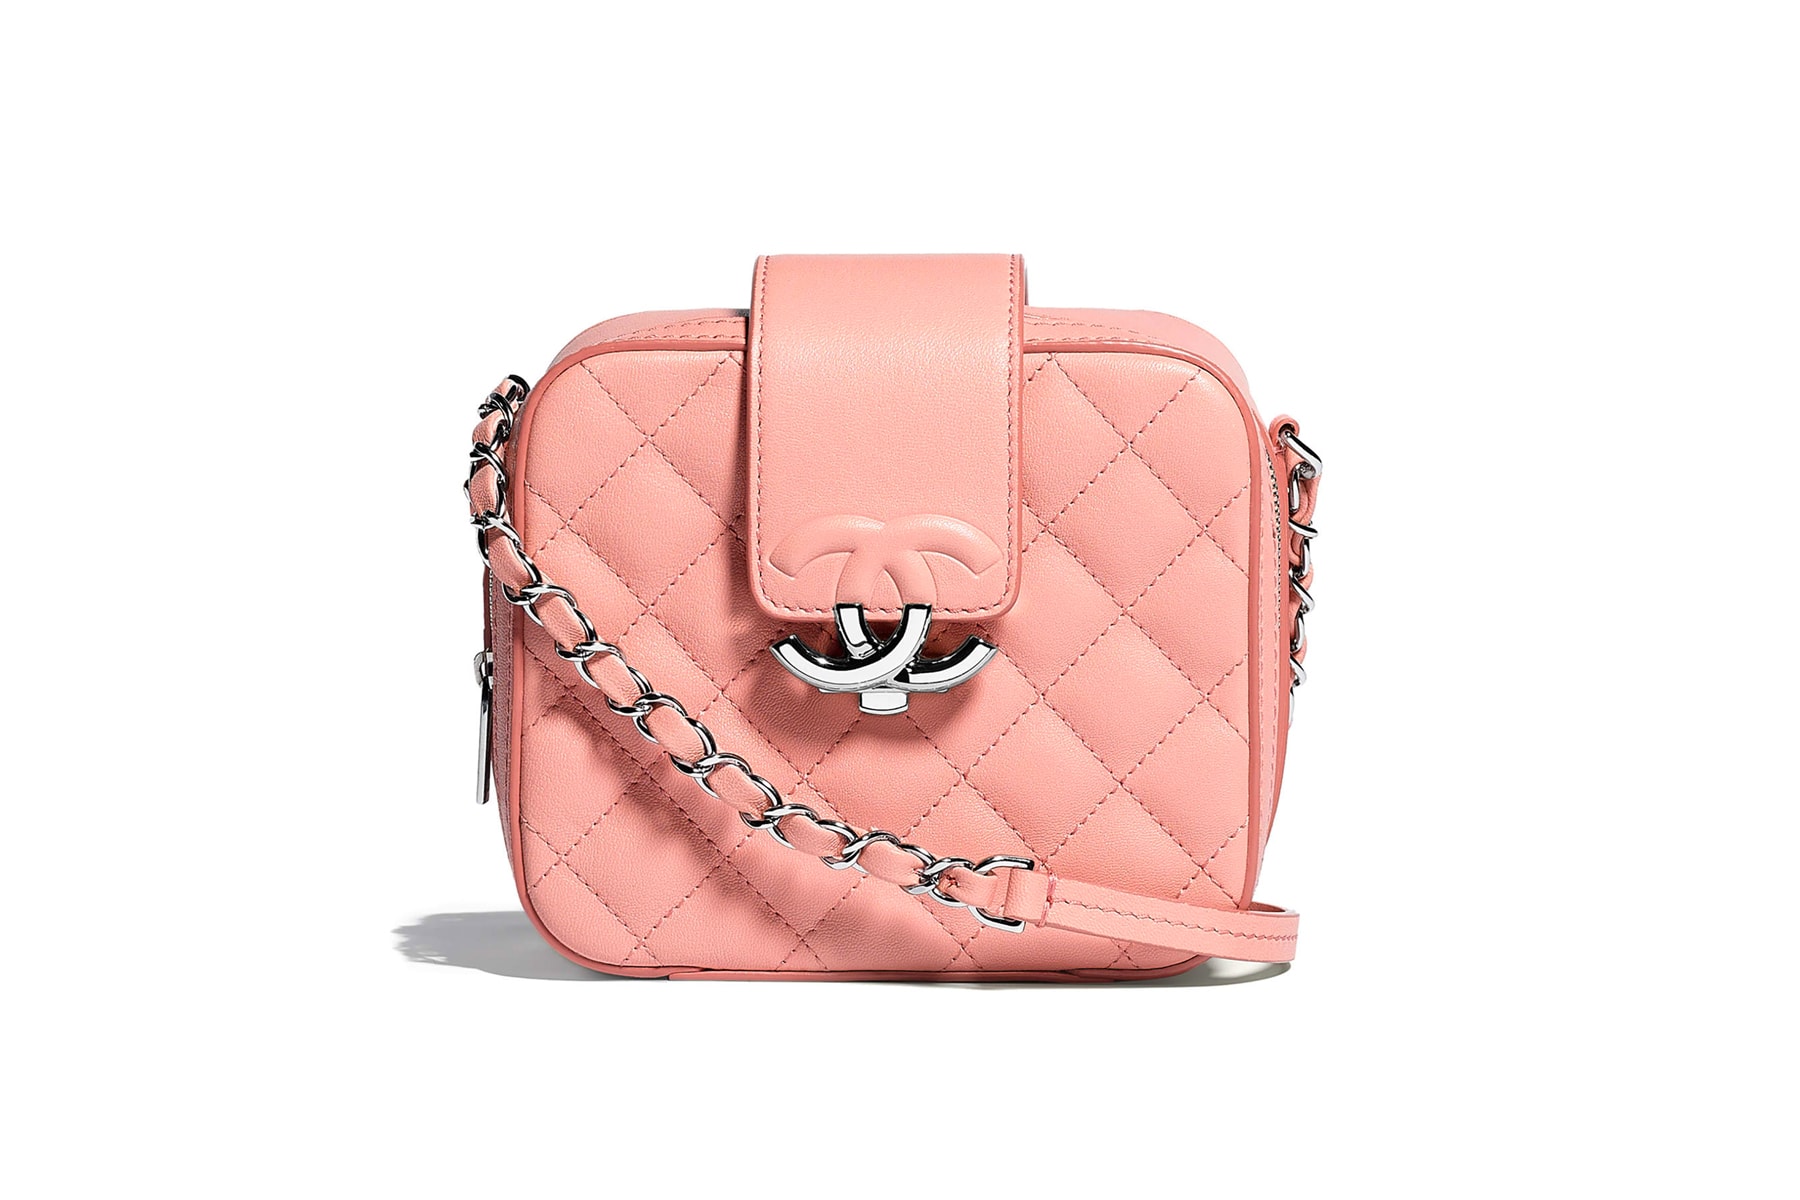 Chanel Camera Case Bag Spring Summer 2018 Pre Collection Pink Pastel